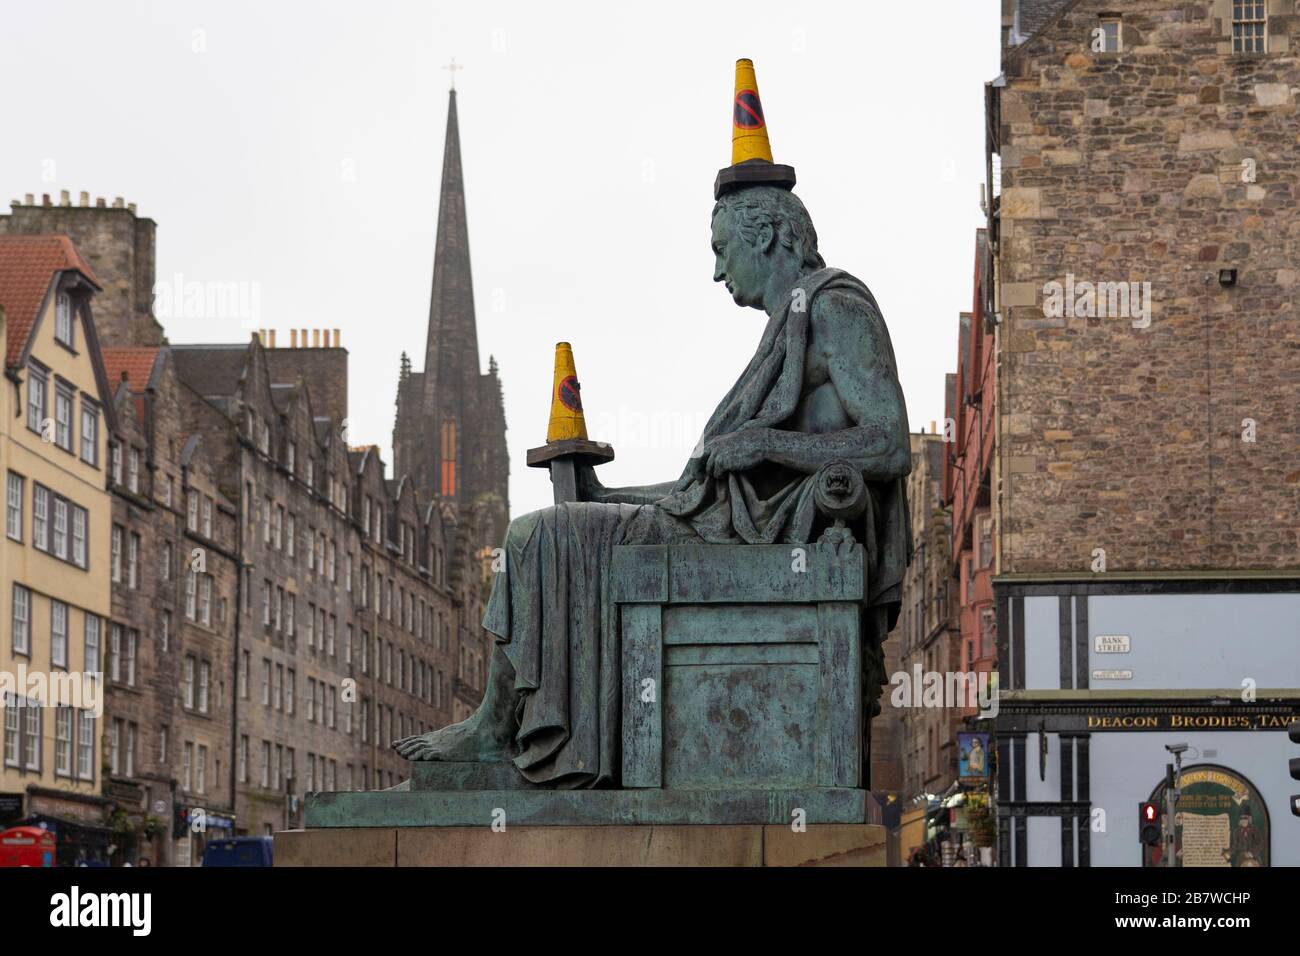 Edinburgh, Scotland, UK. 18 March 2020.Traffic cones placed on statue of David Hume on the Royal Mile in Edinburgh. Iain Masterton/Alamy Live News. Stock Photo